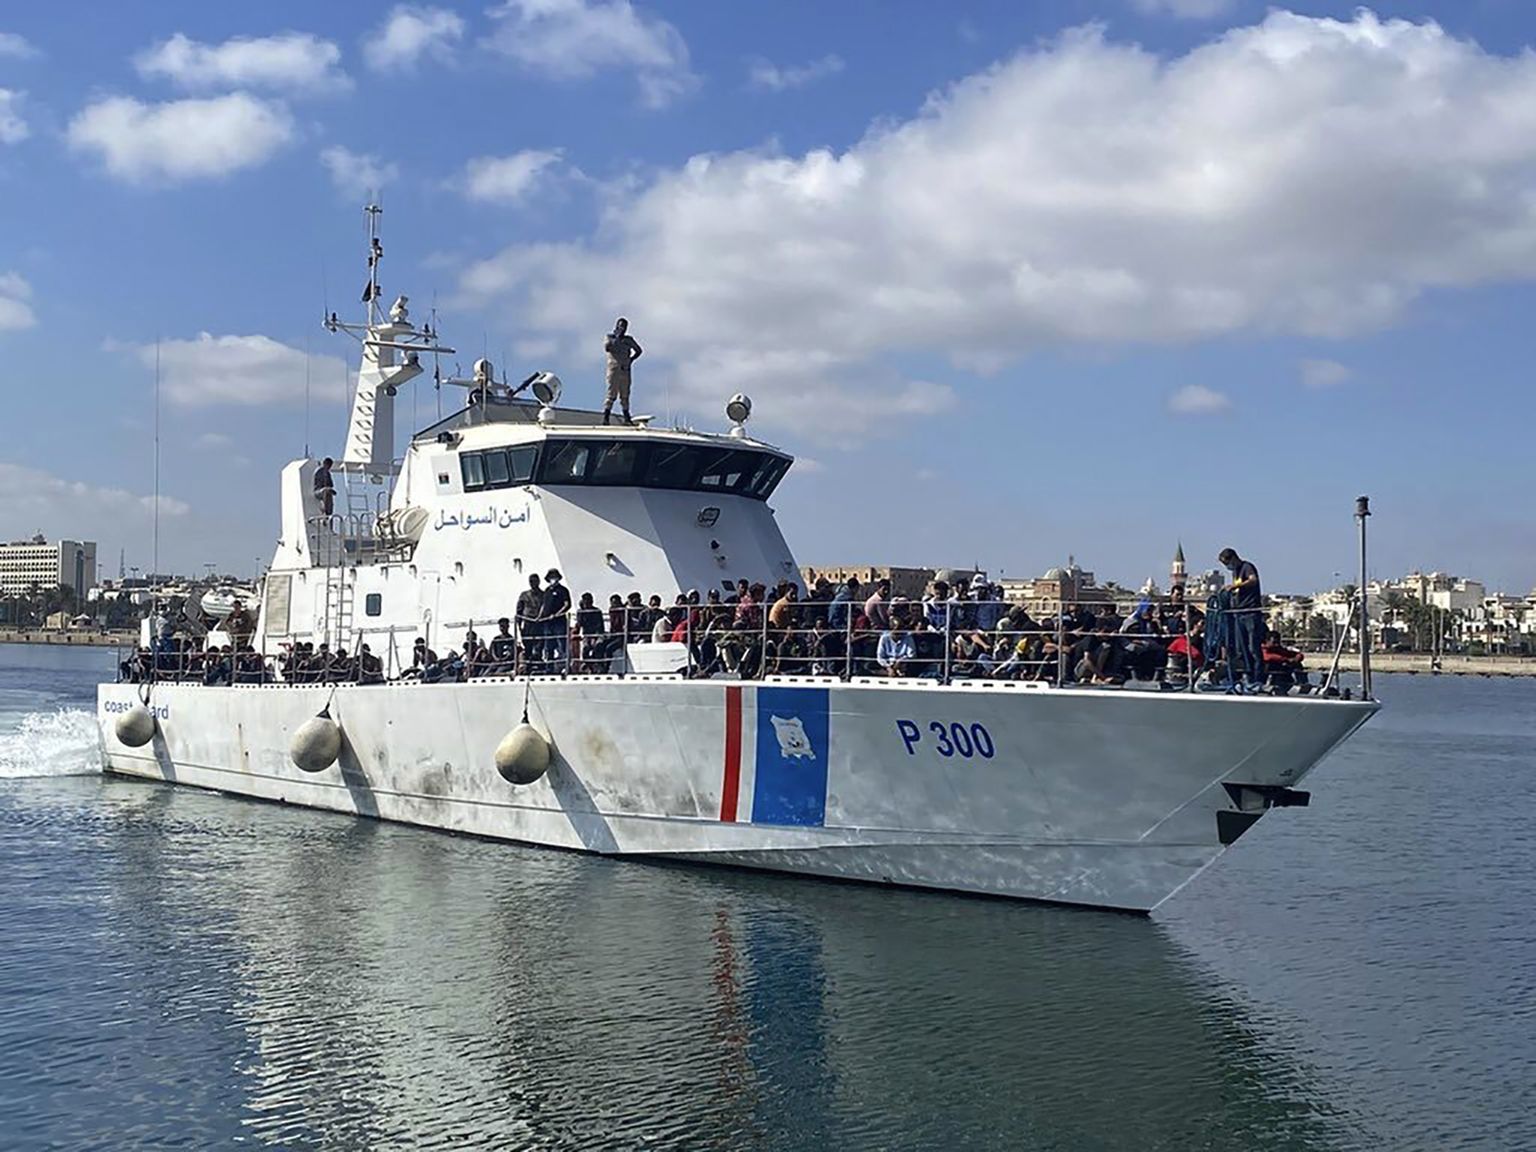 Liibüa piirivalve migrante kaldale toimetamas.